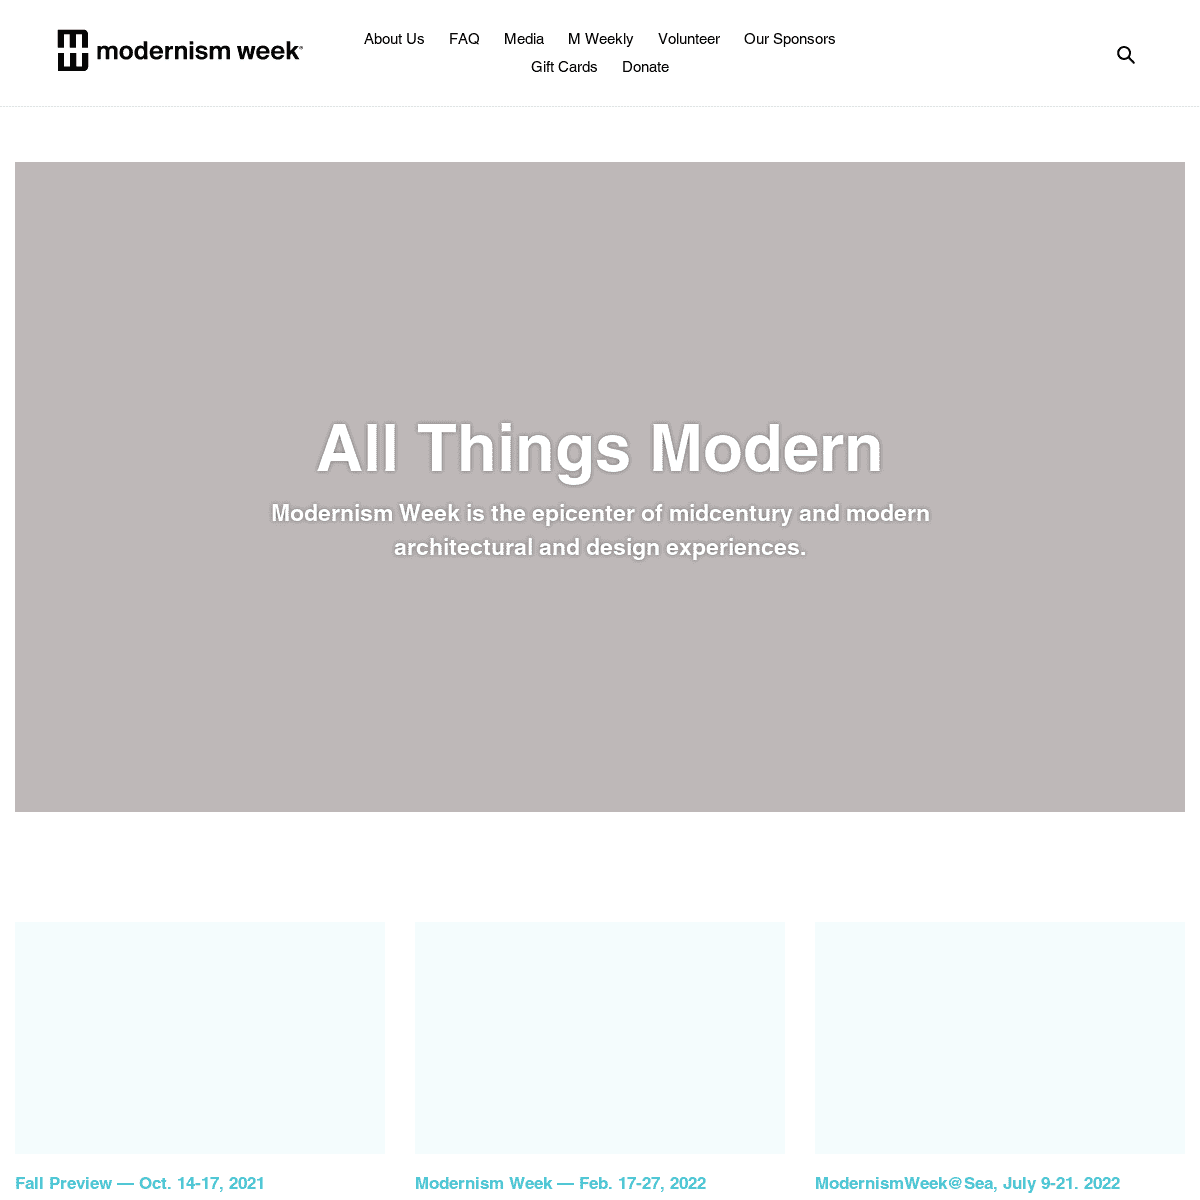 A complete backup of https://modernismweek.com